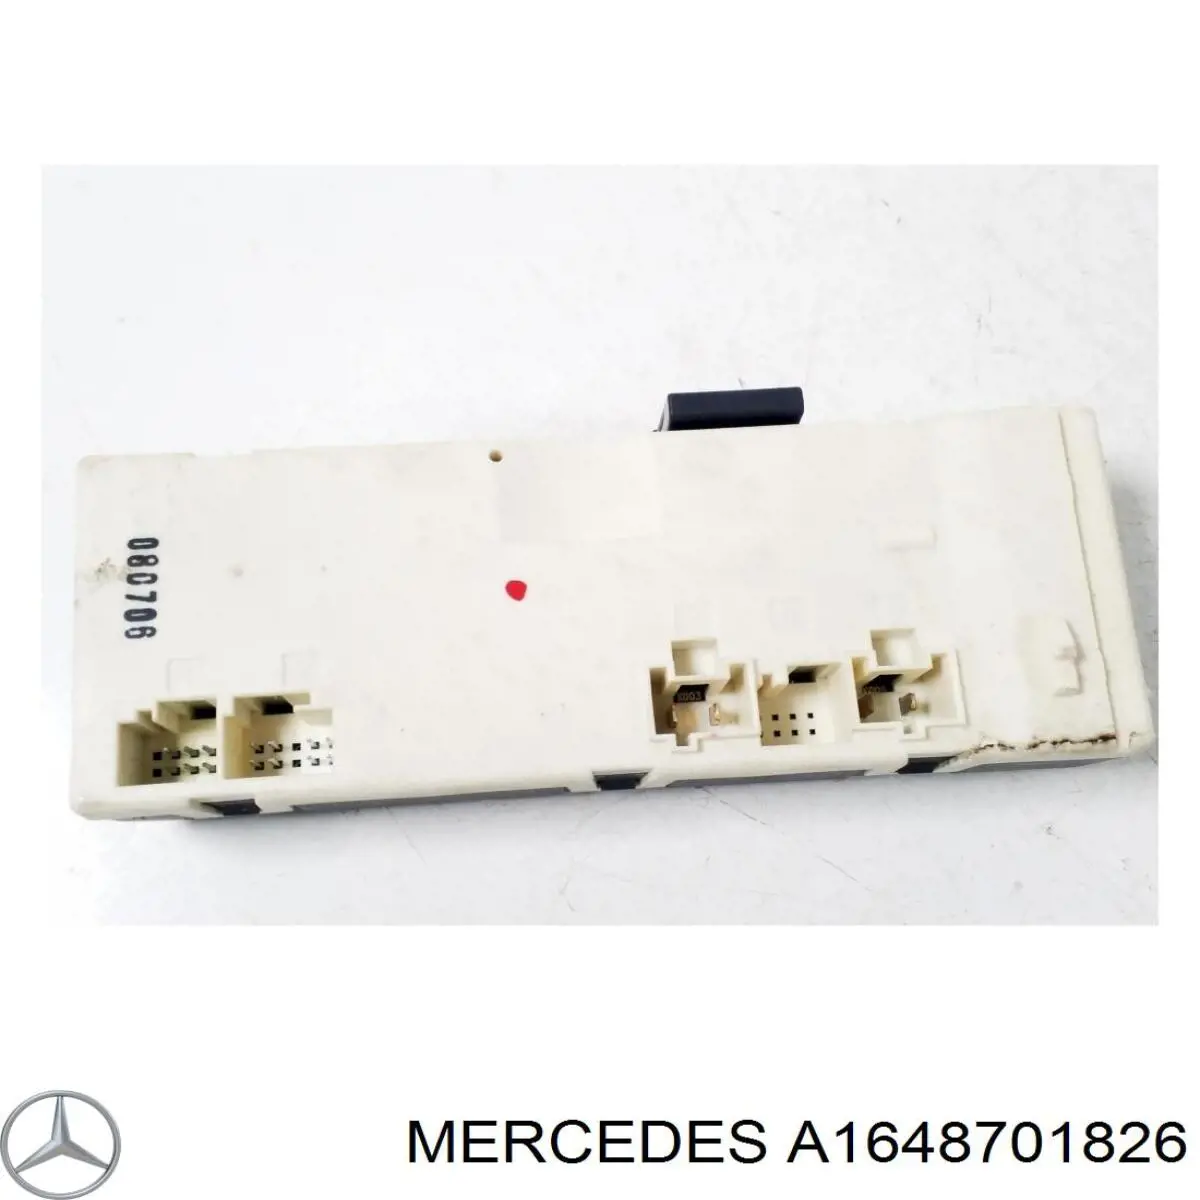 A1648701826 Mercedes